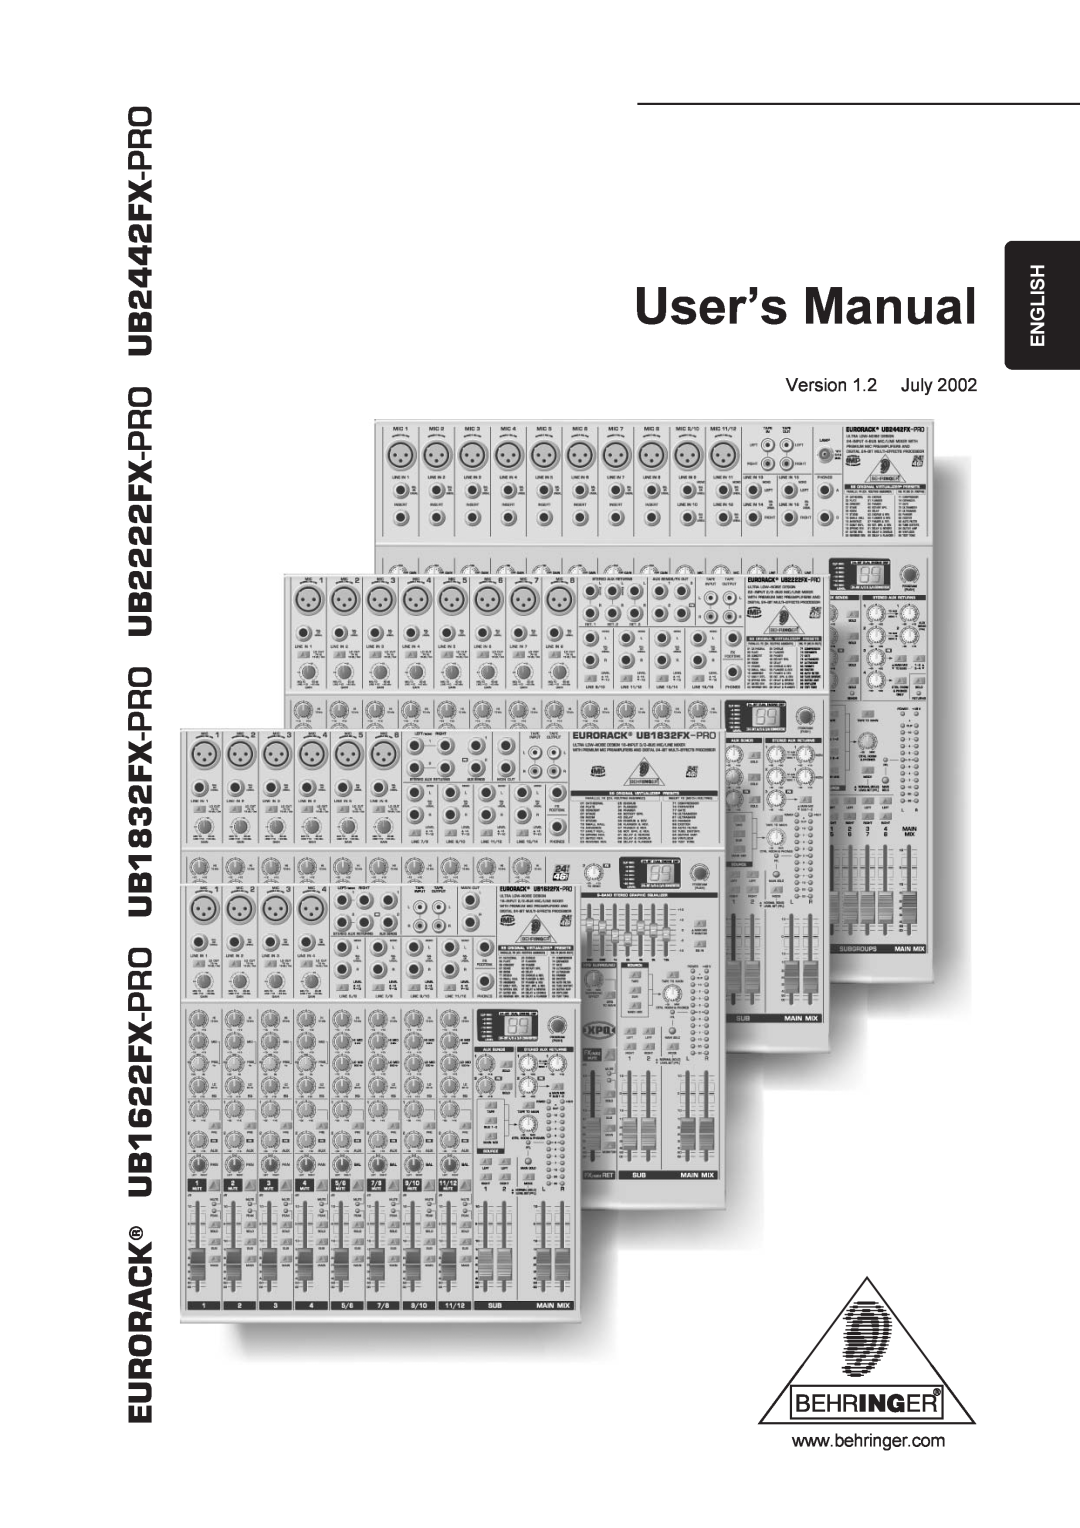 Behringer UB2222FX-PRO, UB2442FX-PRO, UB1622FX-PRO, UB1832FX-PRO manual User’s Manual, English, Version 1.2 July 